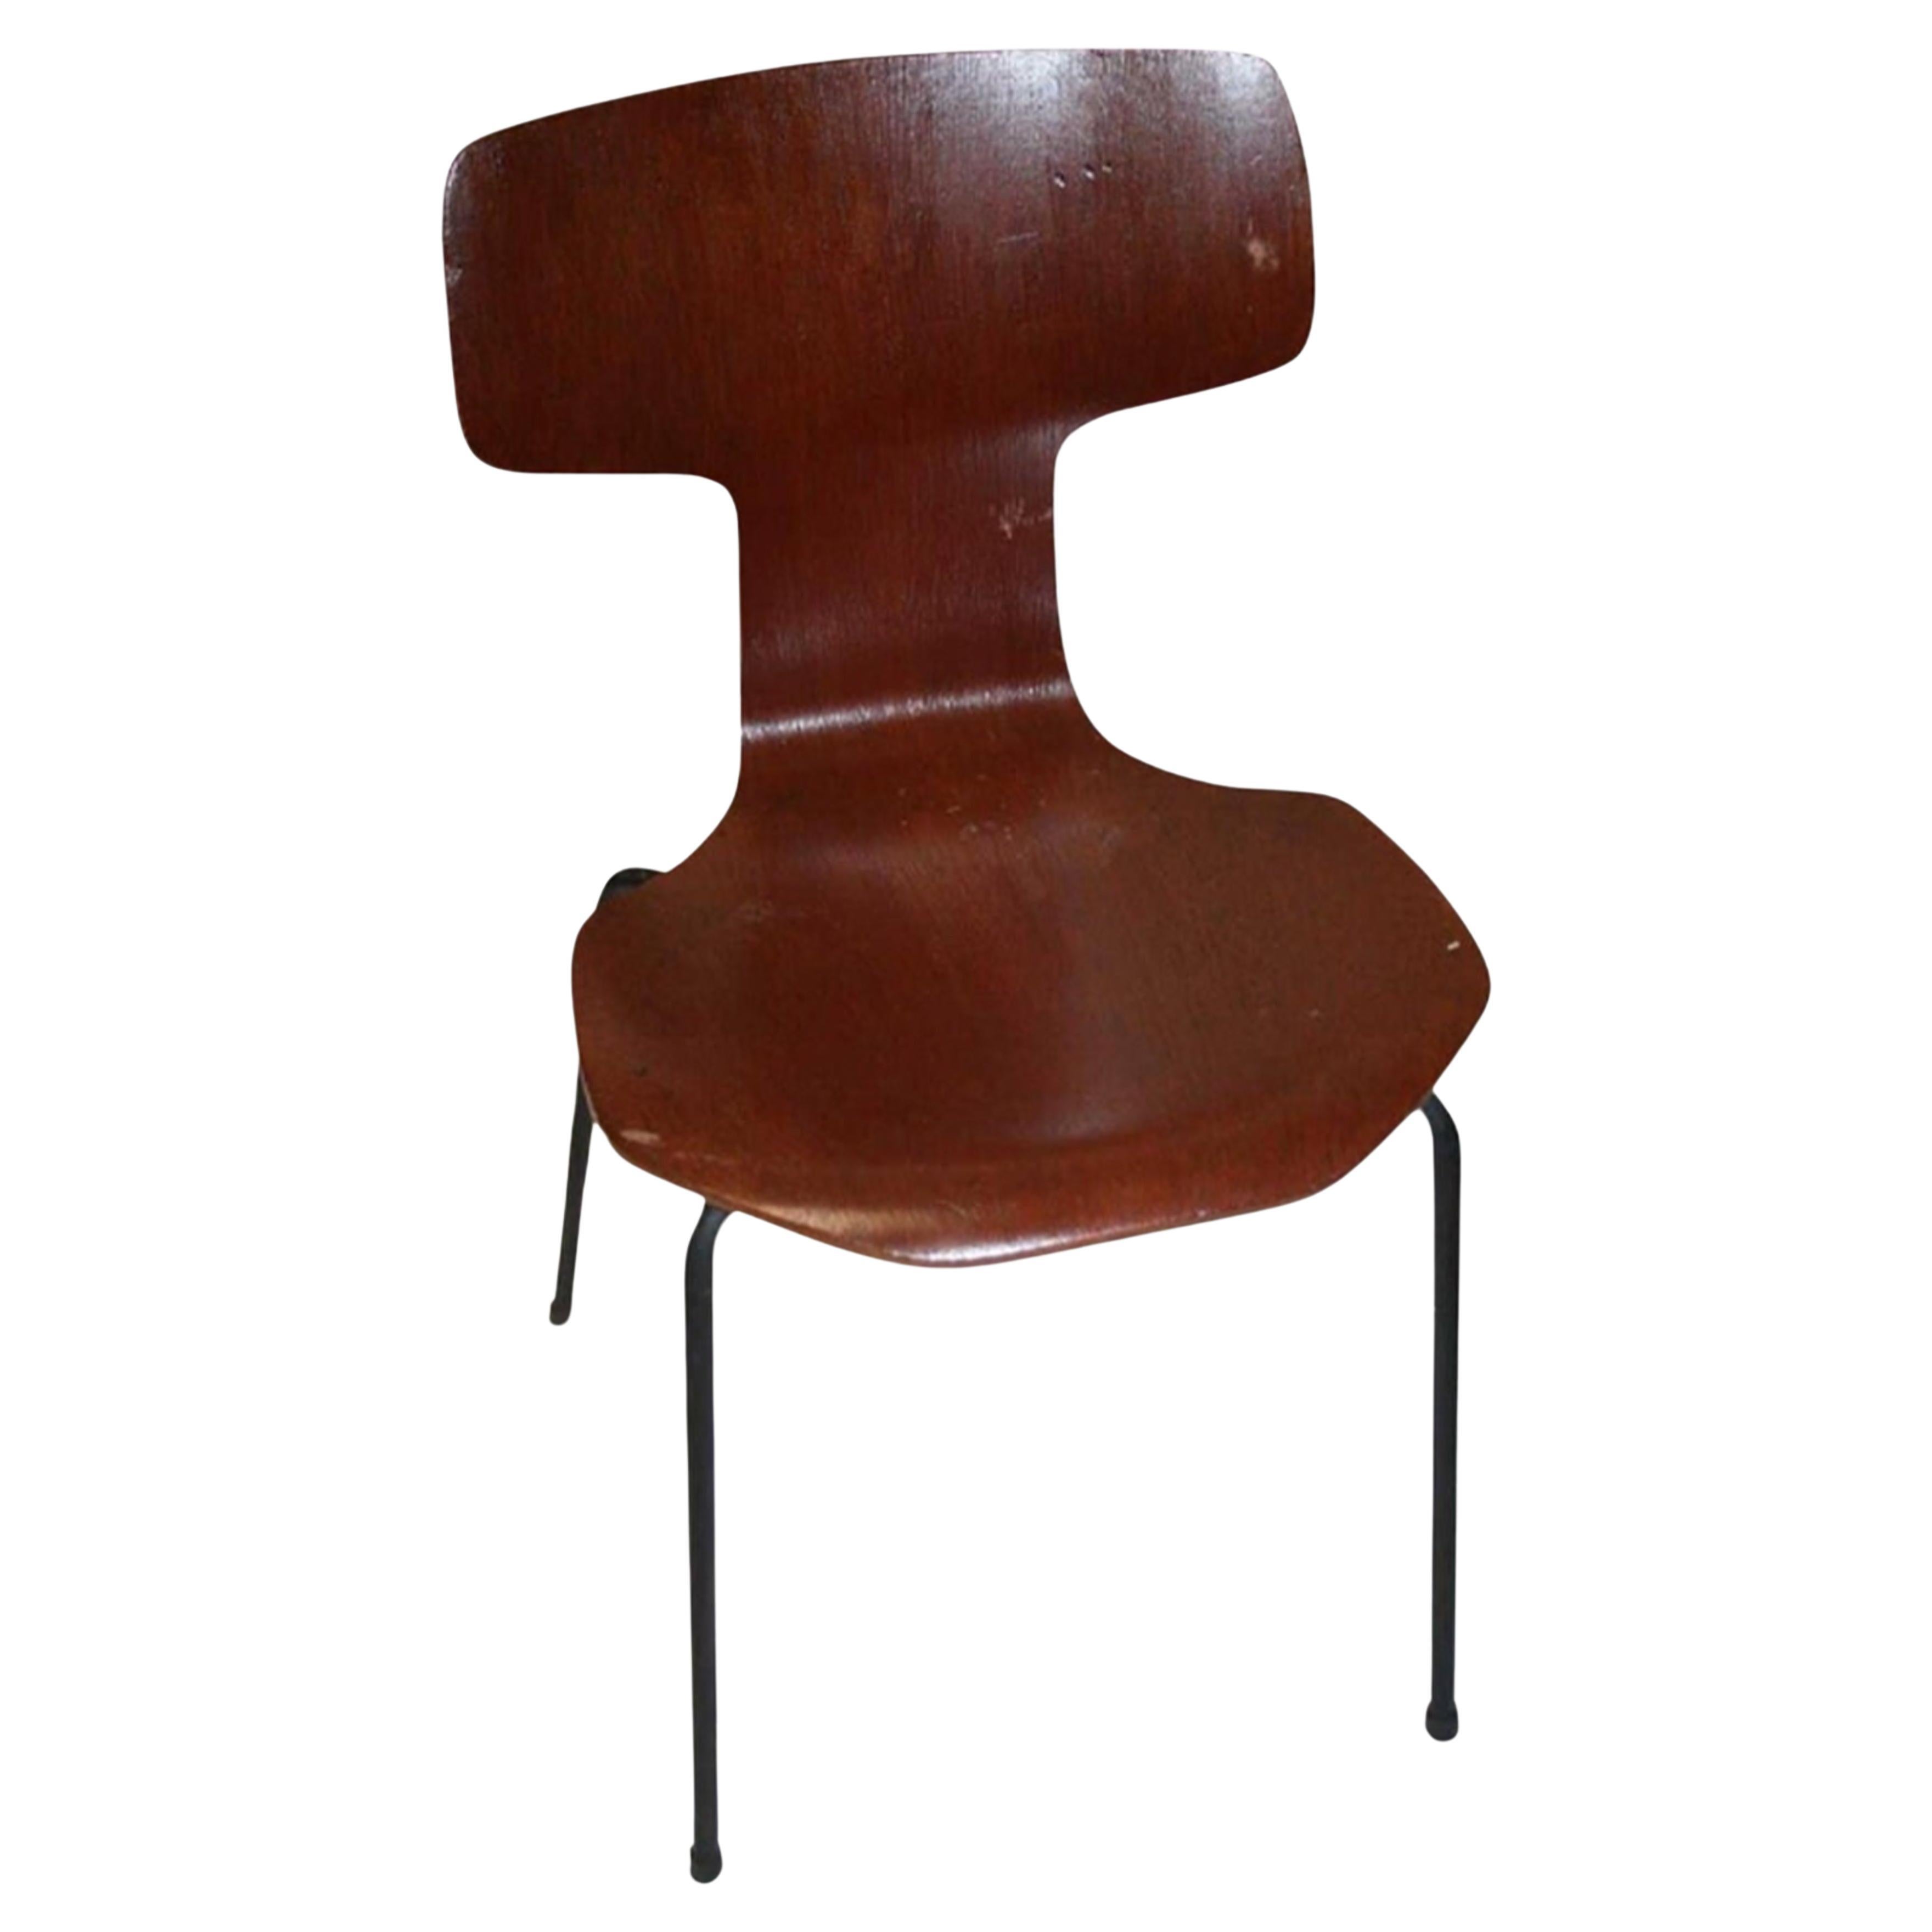 Original Labelled Arne Jacobsen für Fritz Hansen, Modell 3103, „Hammer-Stuhl“, 1965